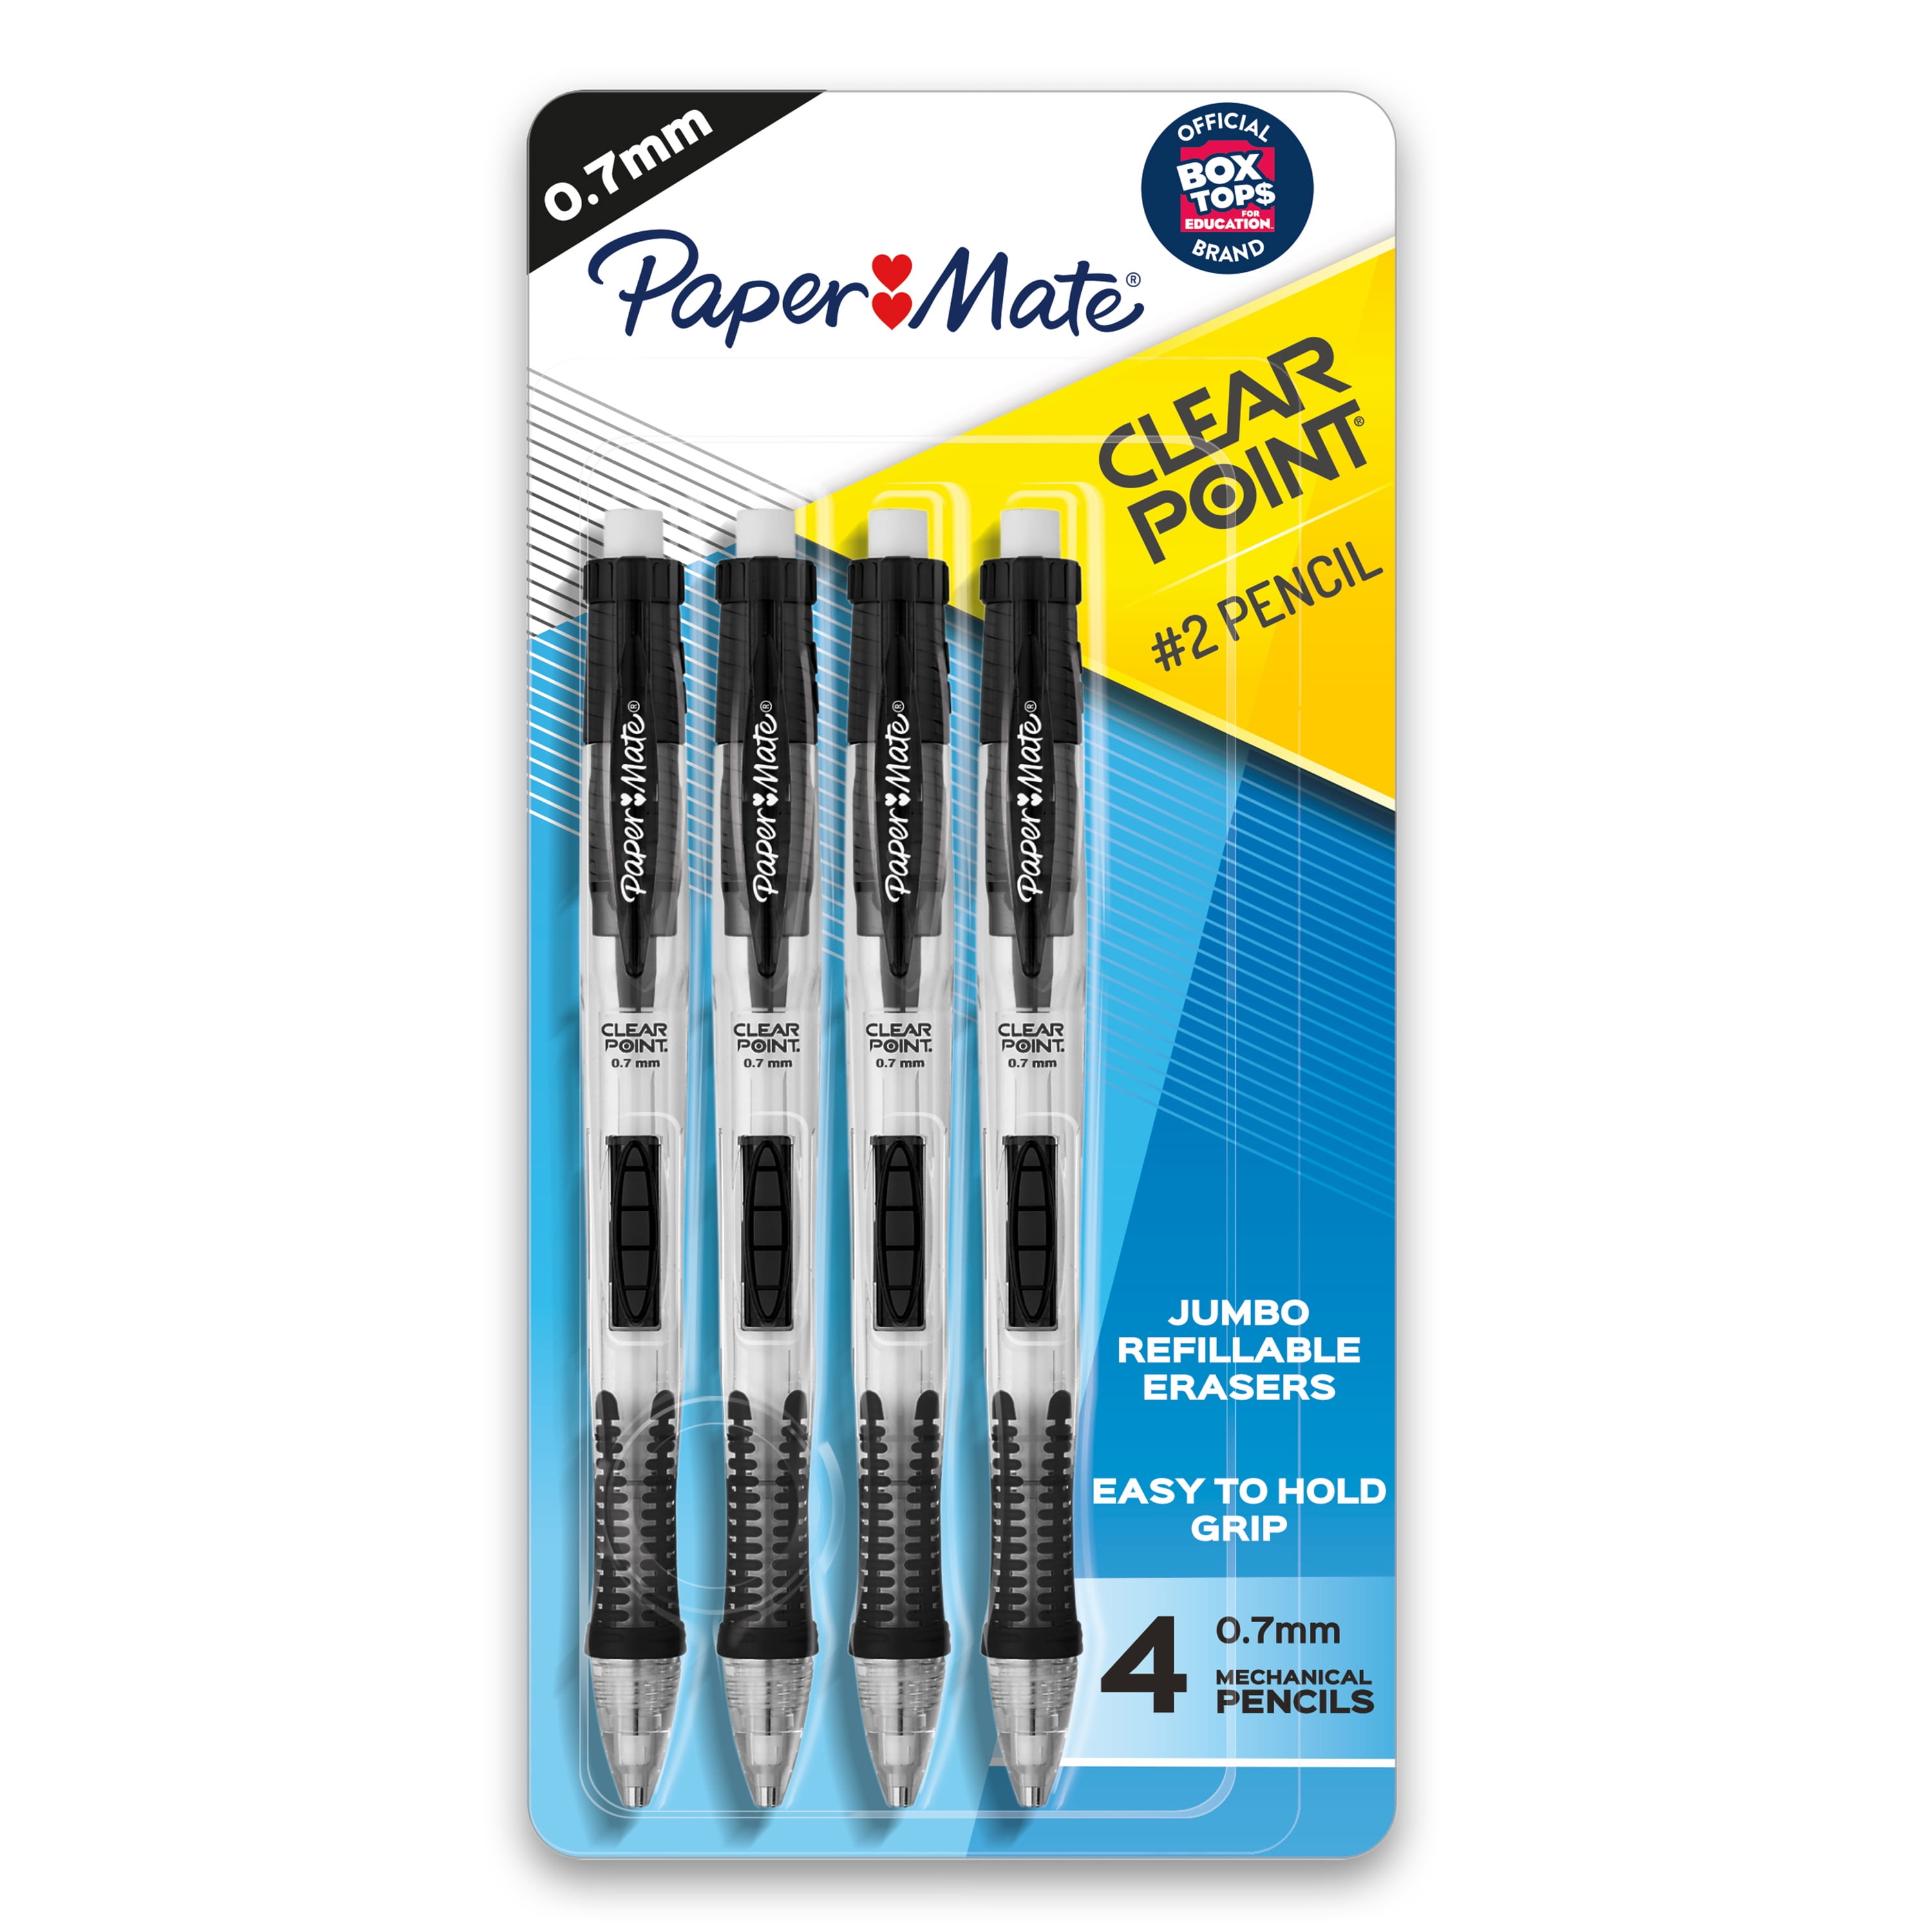 Sakura Electric Eraser Refills for Pencils - 60 count